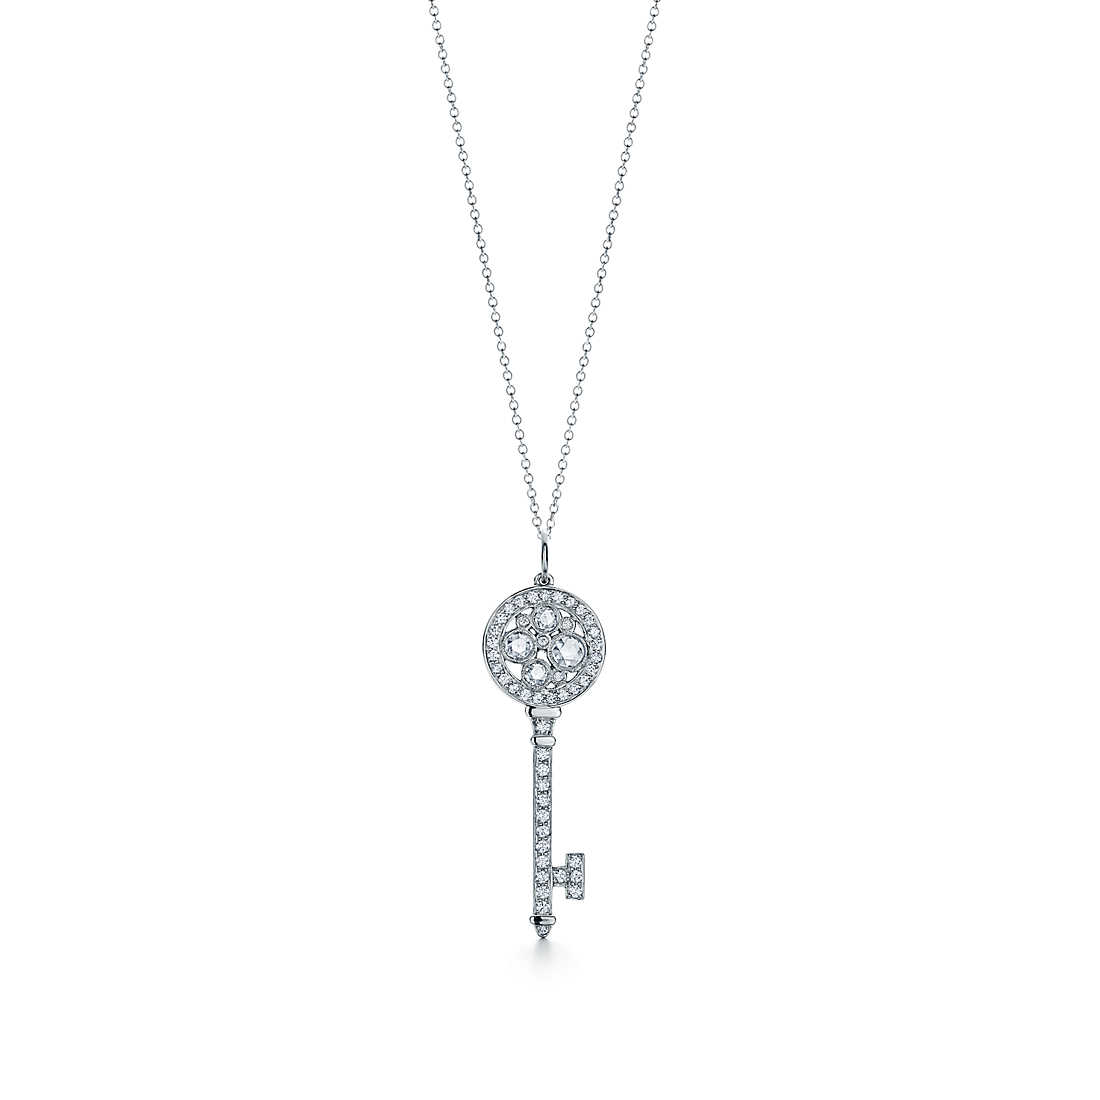 Hoop earrings in platinum with diamonds, medium. | Tiffany & Co.